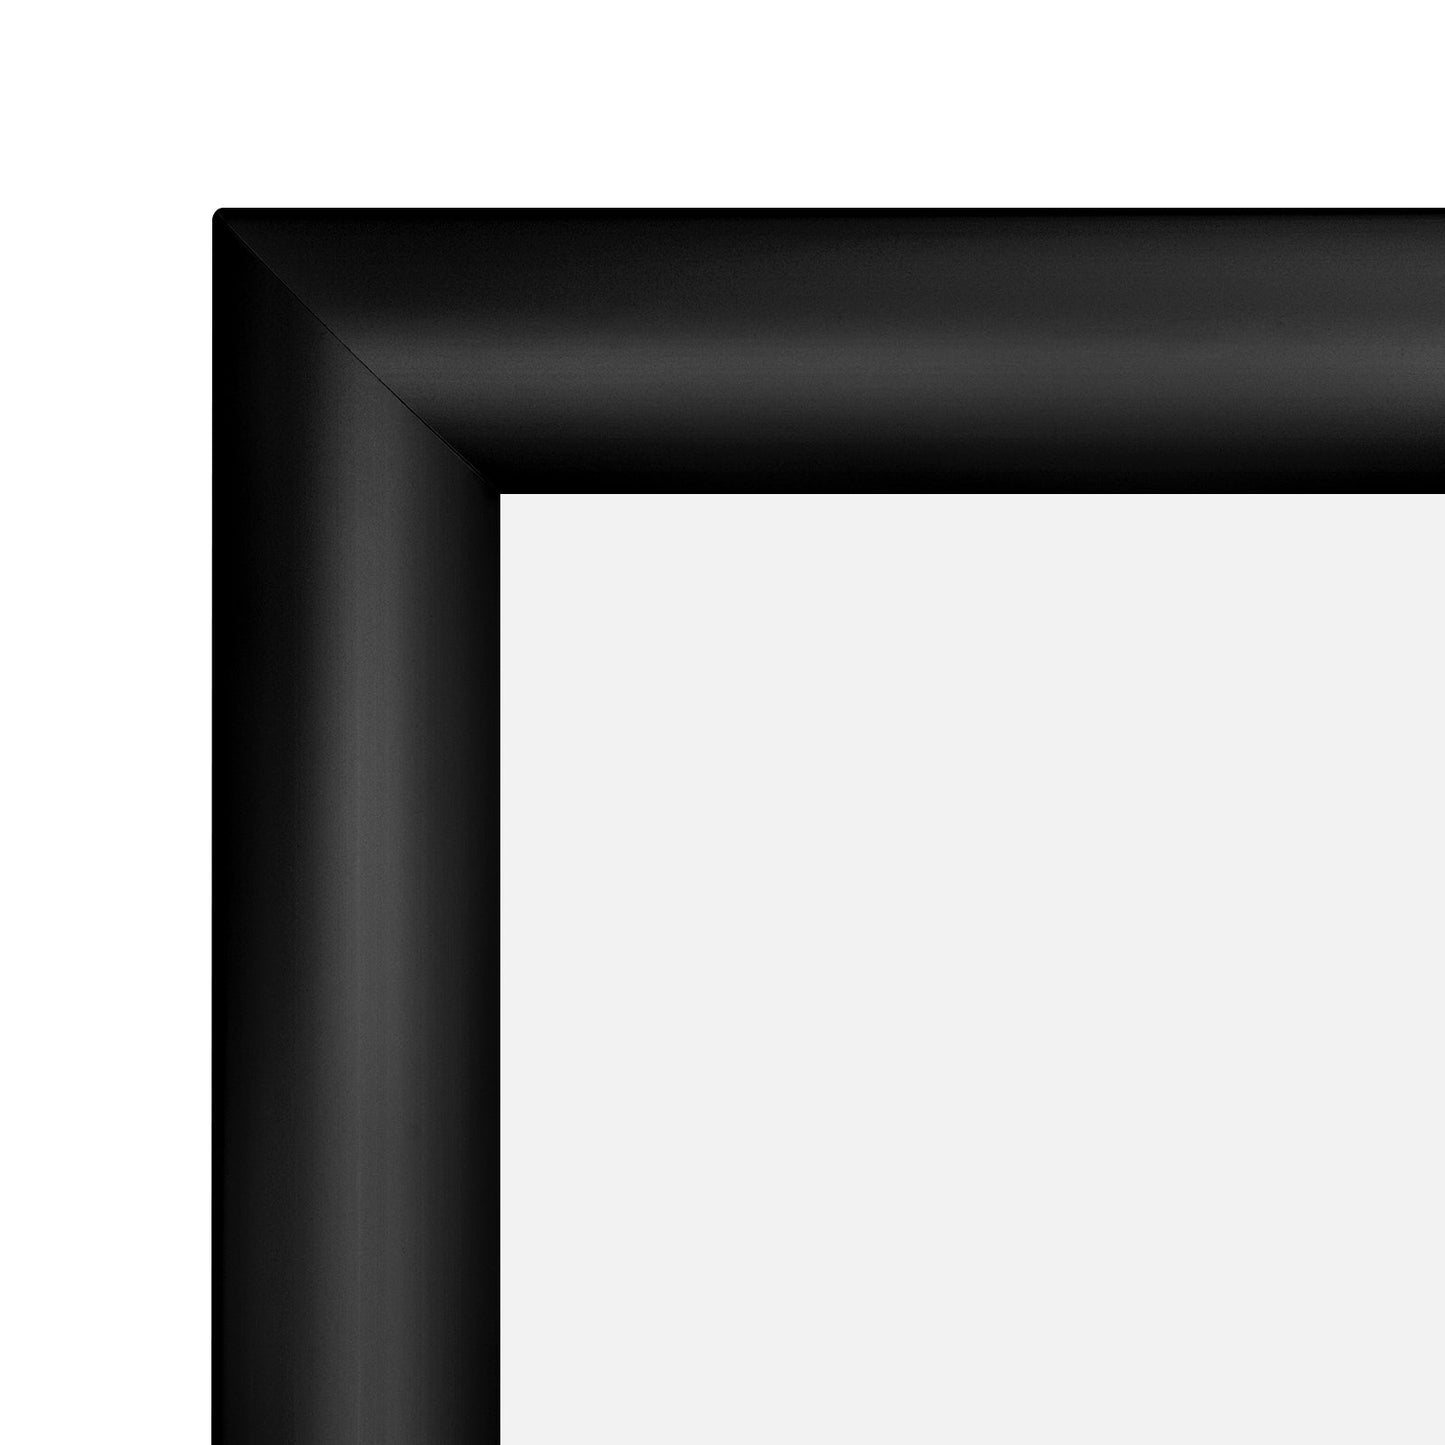 22x28 Black SnapeZo® Snap Frame - 1.2" Profile